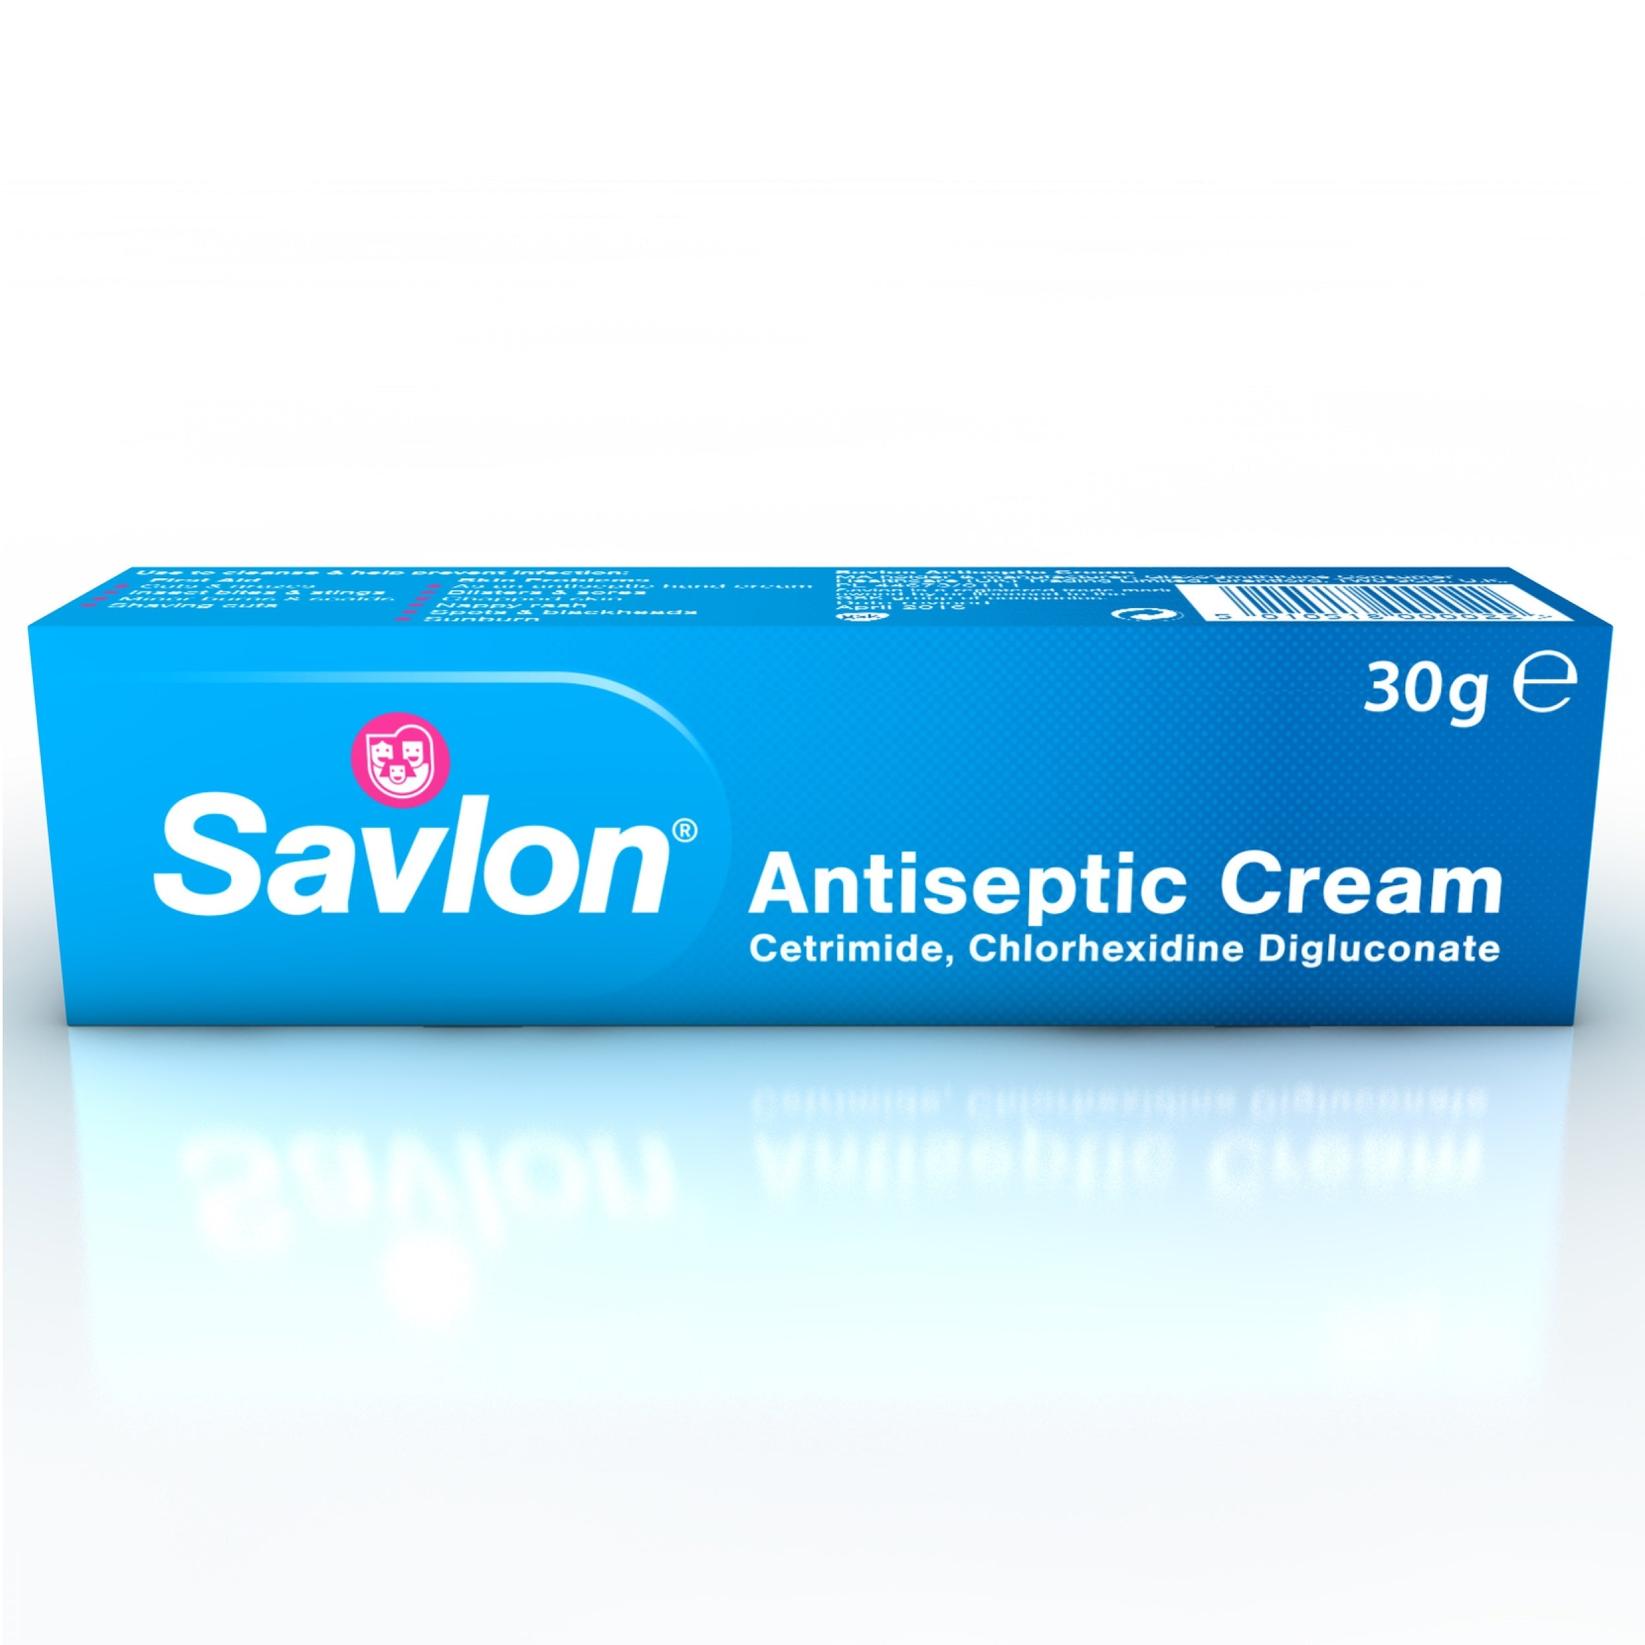 Savlon antiseptic cream offers at £249 in Lloyds Pharmacy